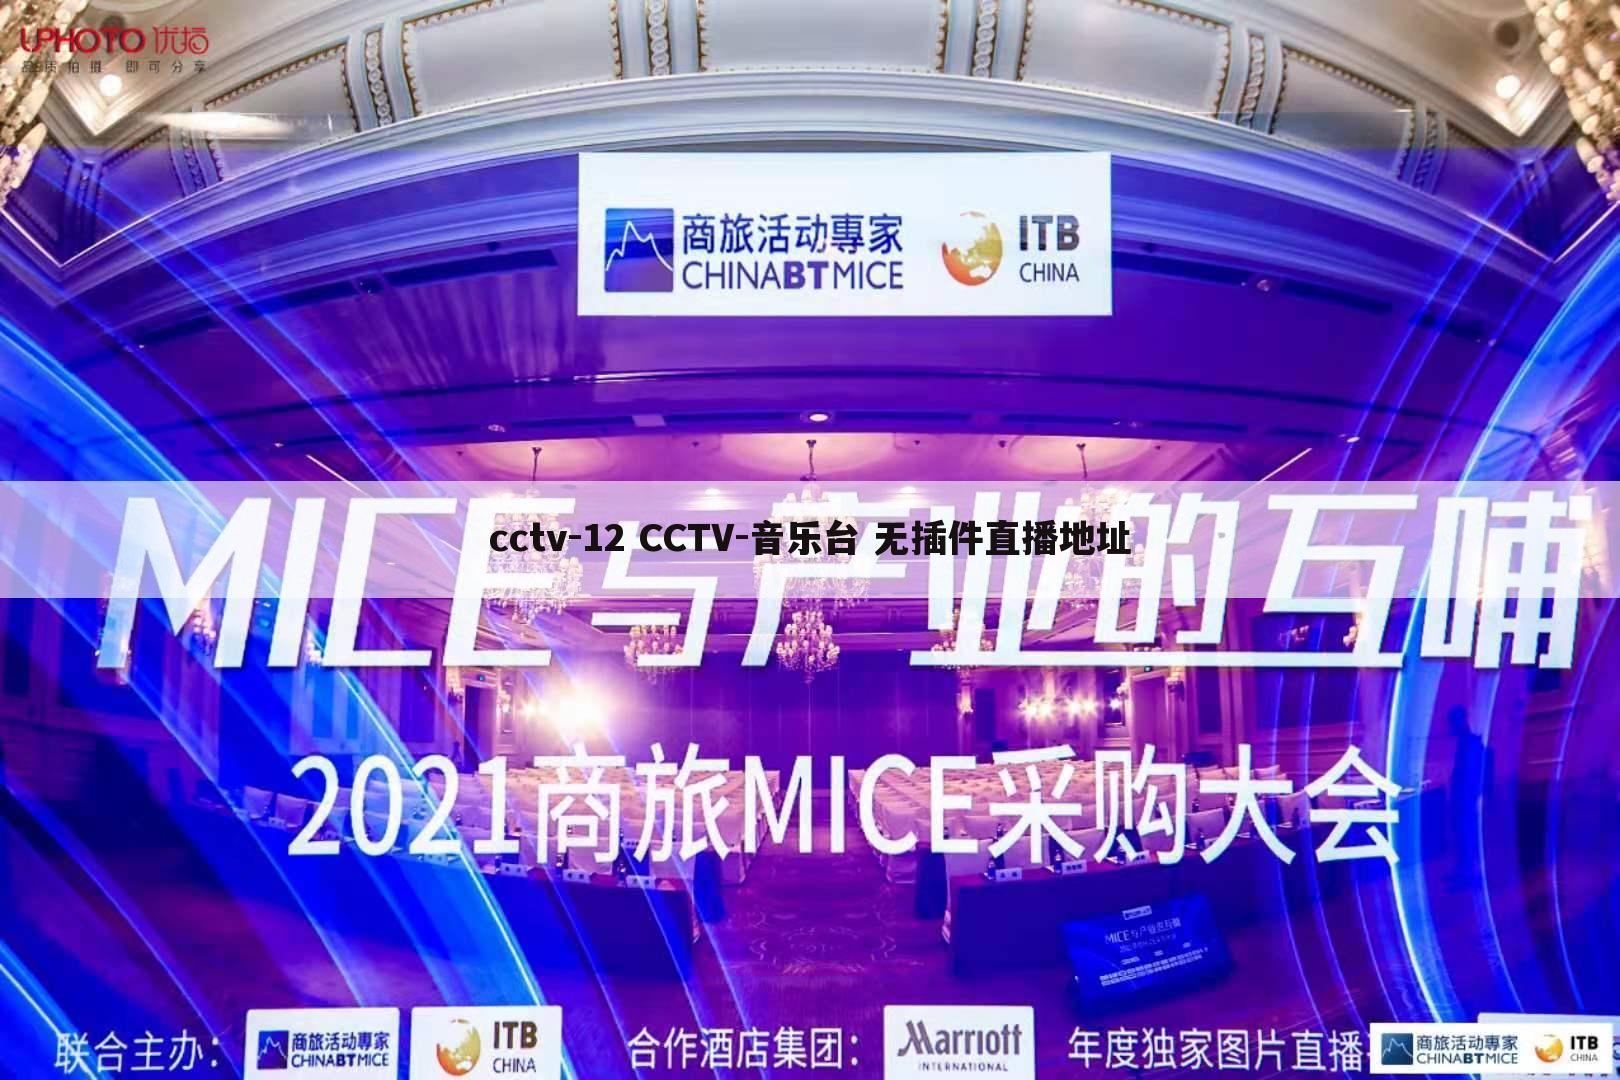 cctv-12 CCTV-音乐台 无插件直播地址